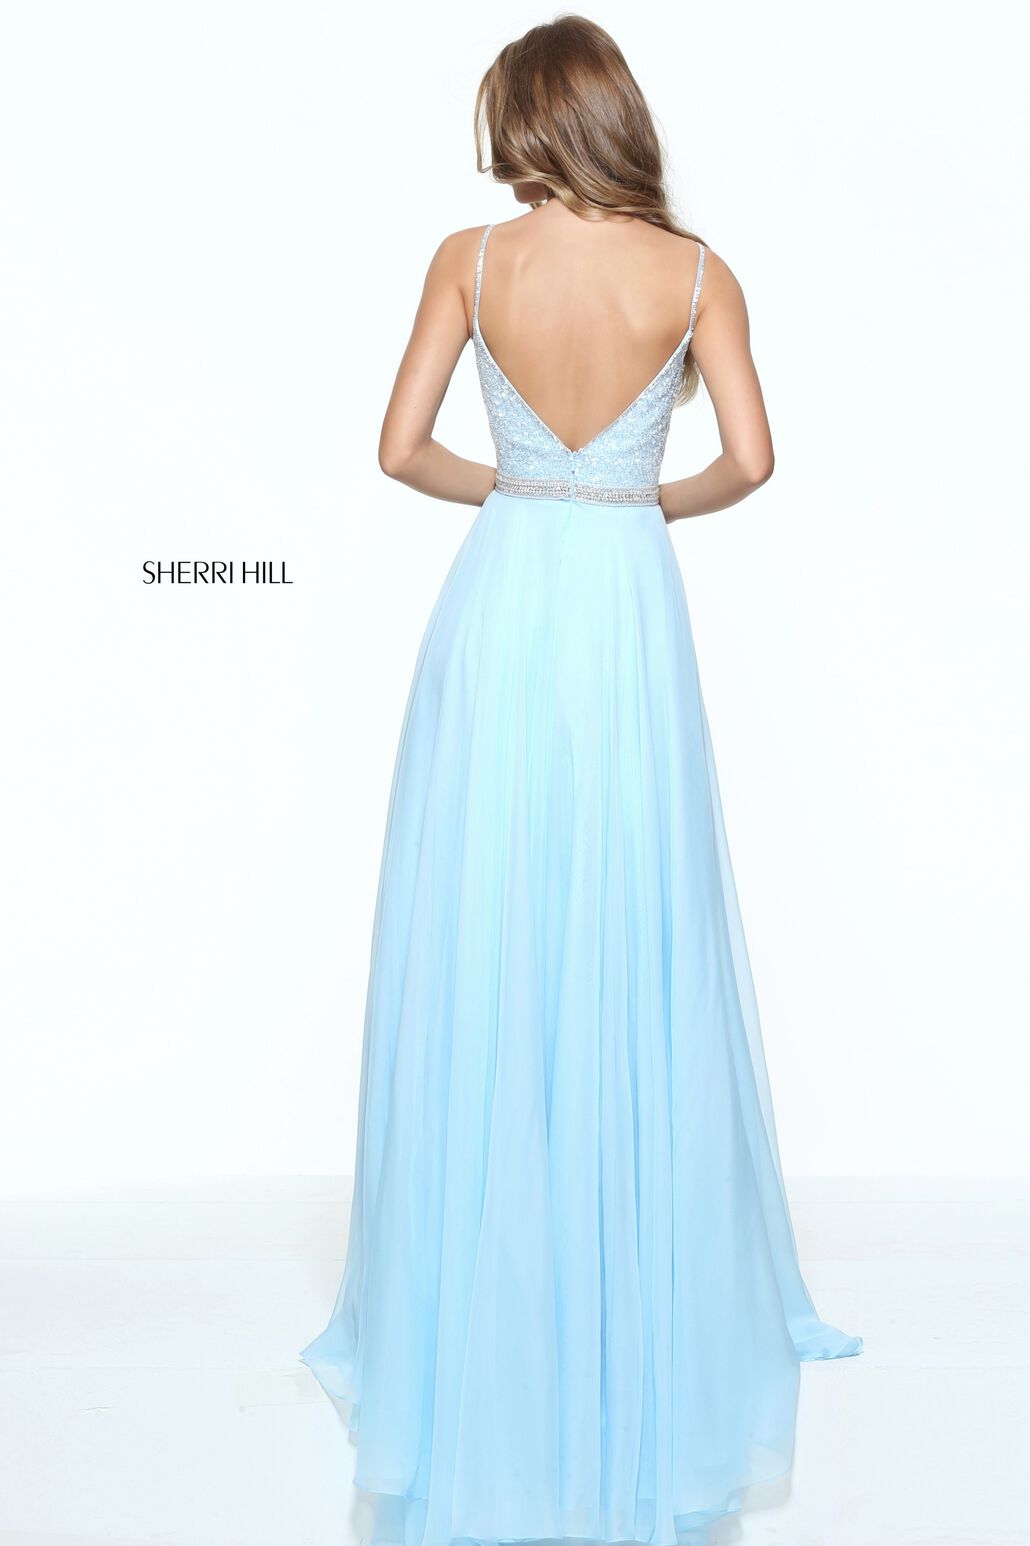 Buy dress style № 51009 designed by SherriHill